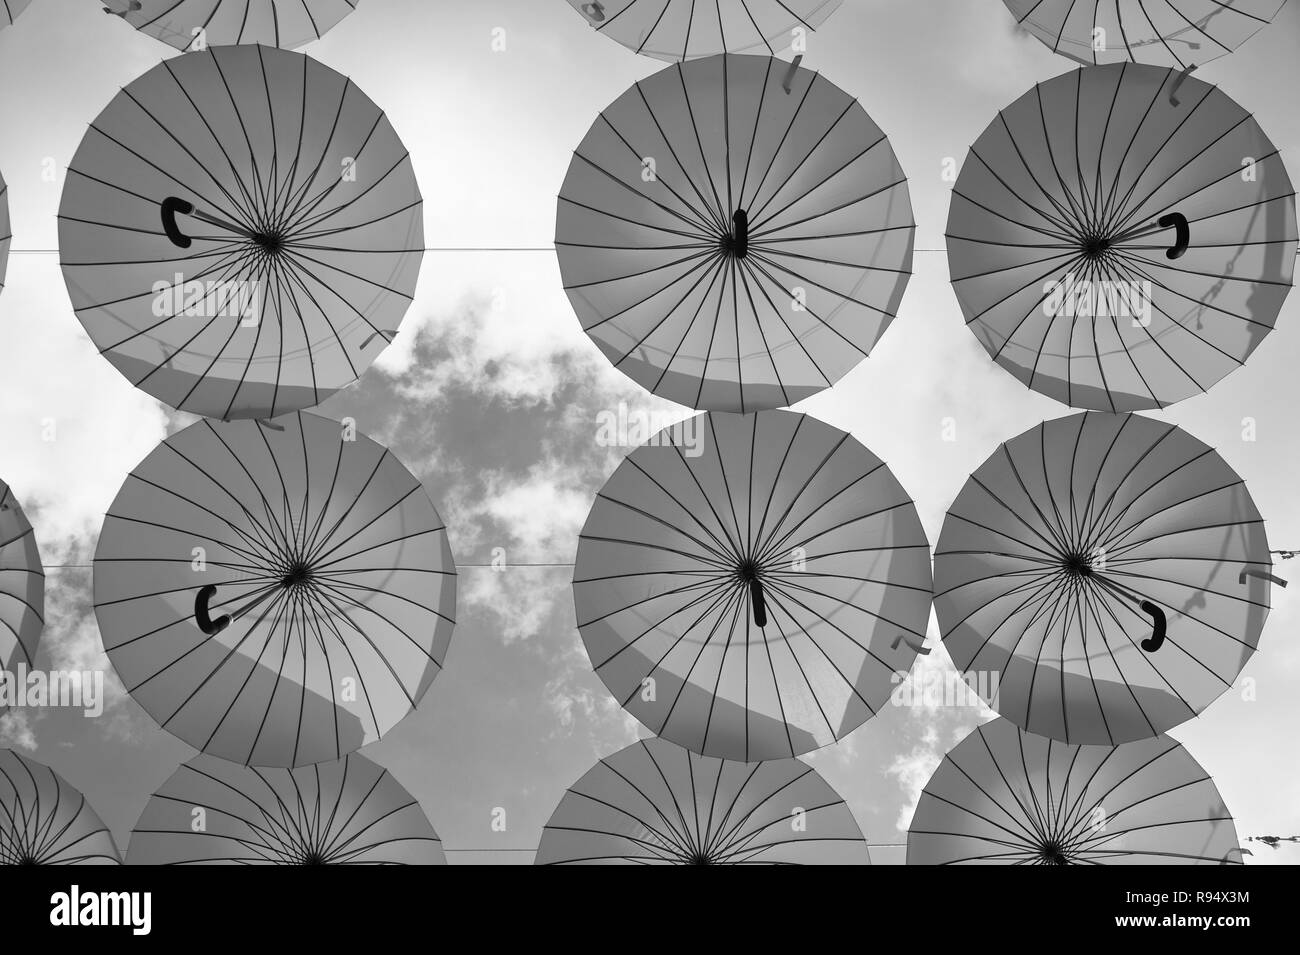 Artistic umbrella Black and White Stock Photos & Images - Alamy